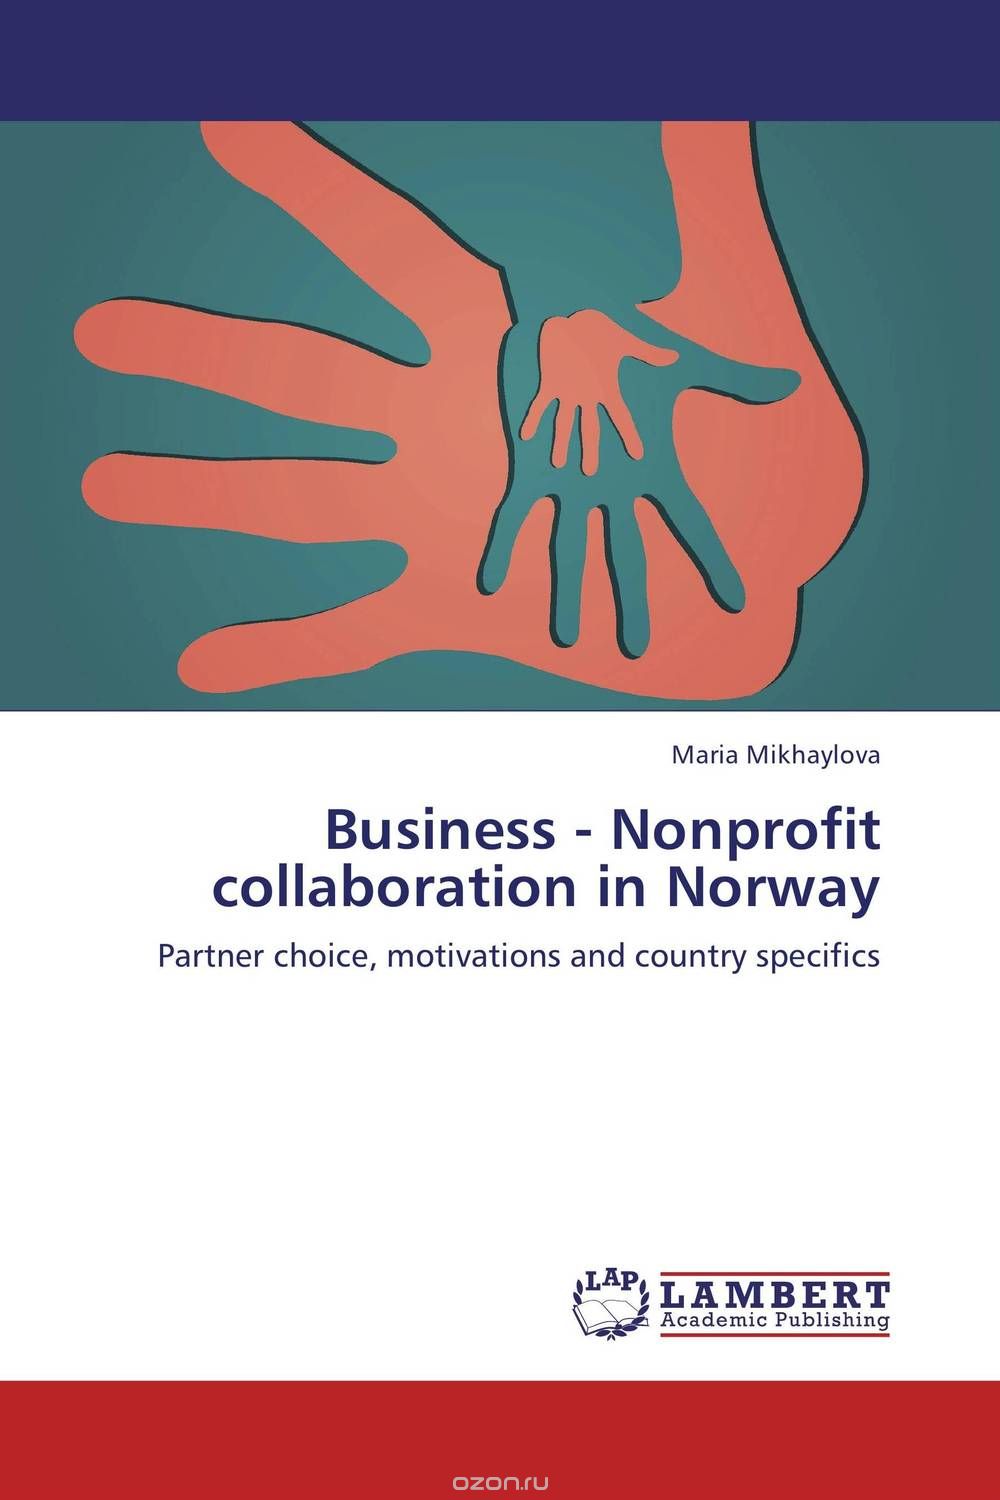 Скачать книгу "Business - Nonprofit collaboration in Norway"